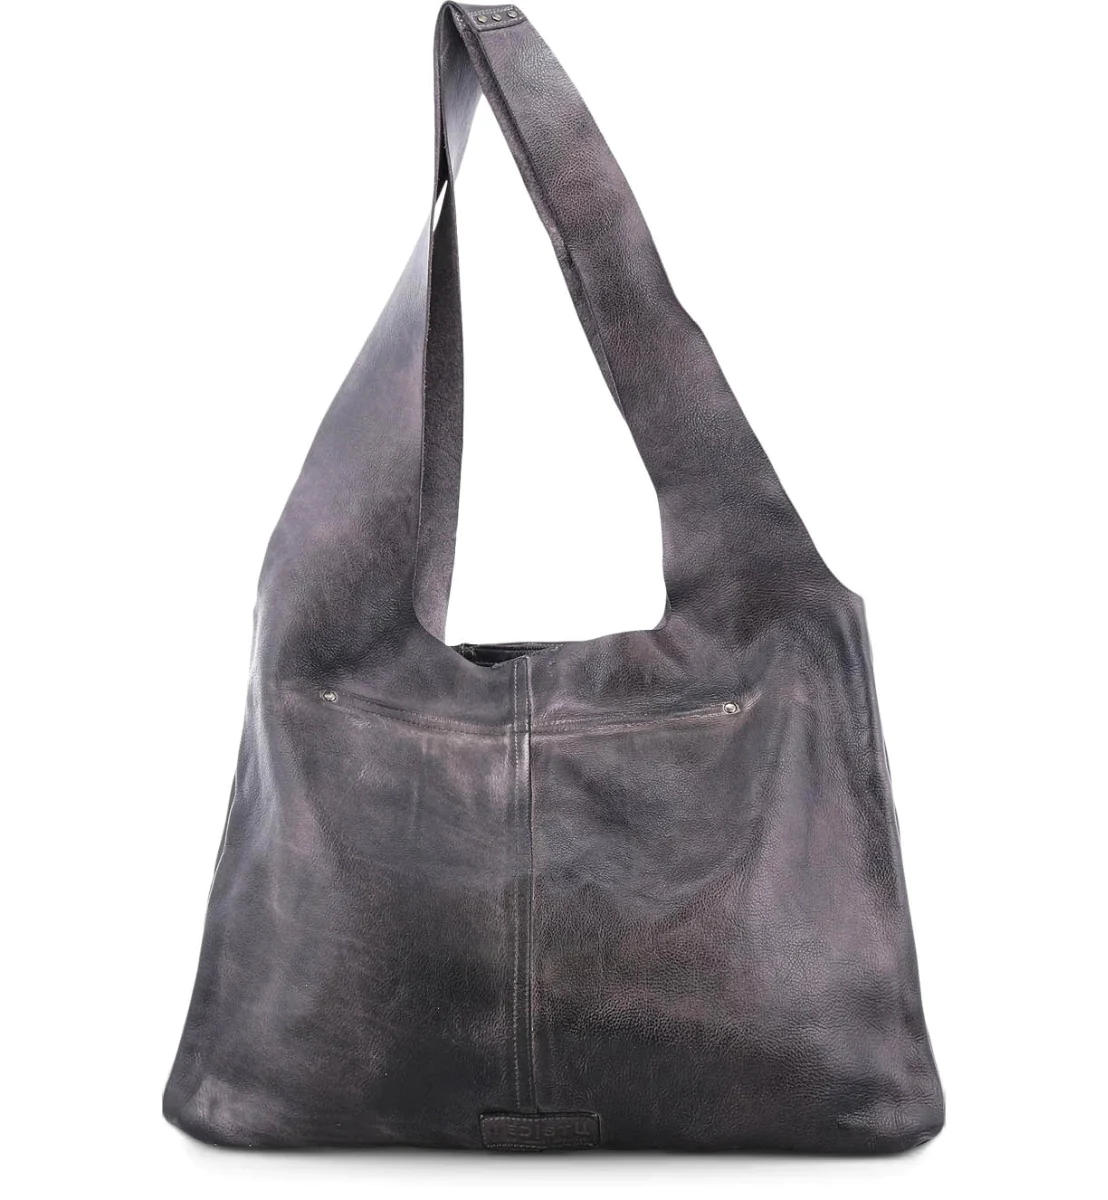 Bed Stu Ariel Handbag in Black DD - SpiritedBoutiques Boho Hippie Boutique Style Purse, Bed Stu